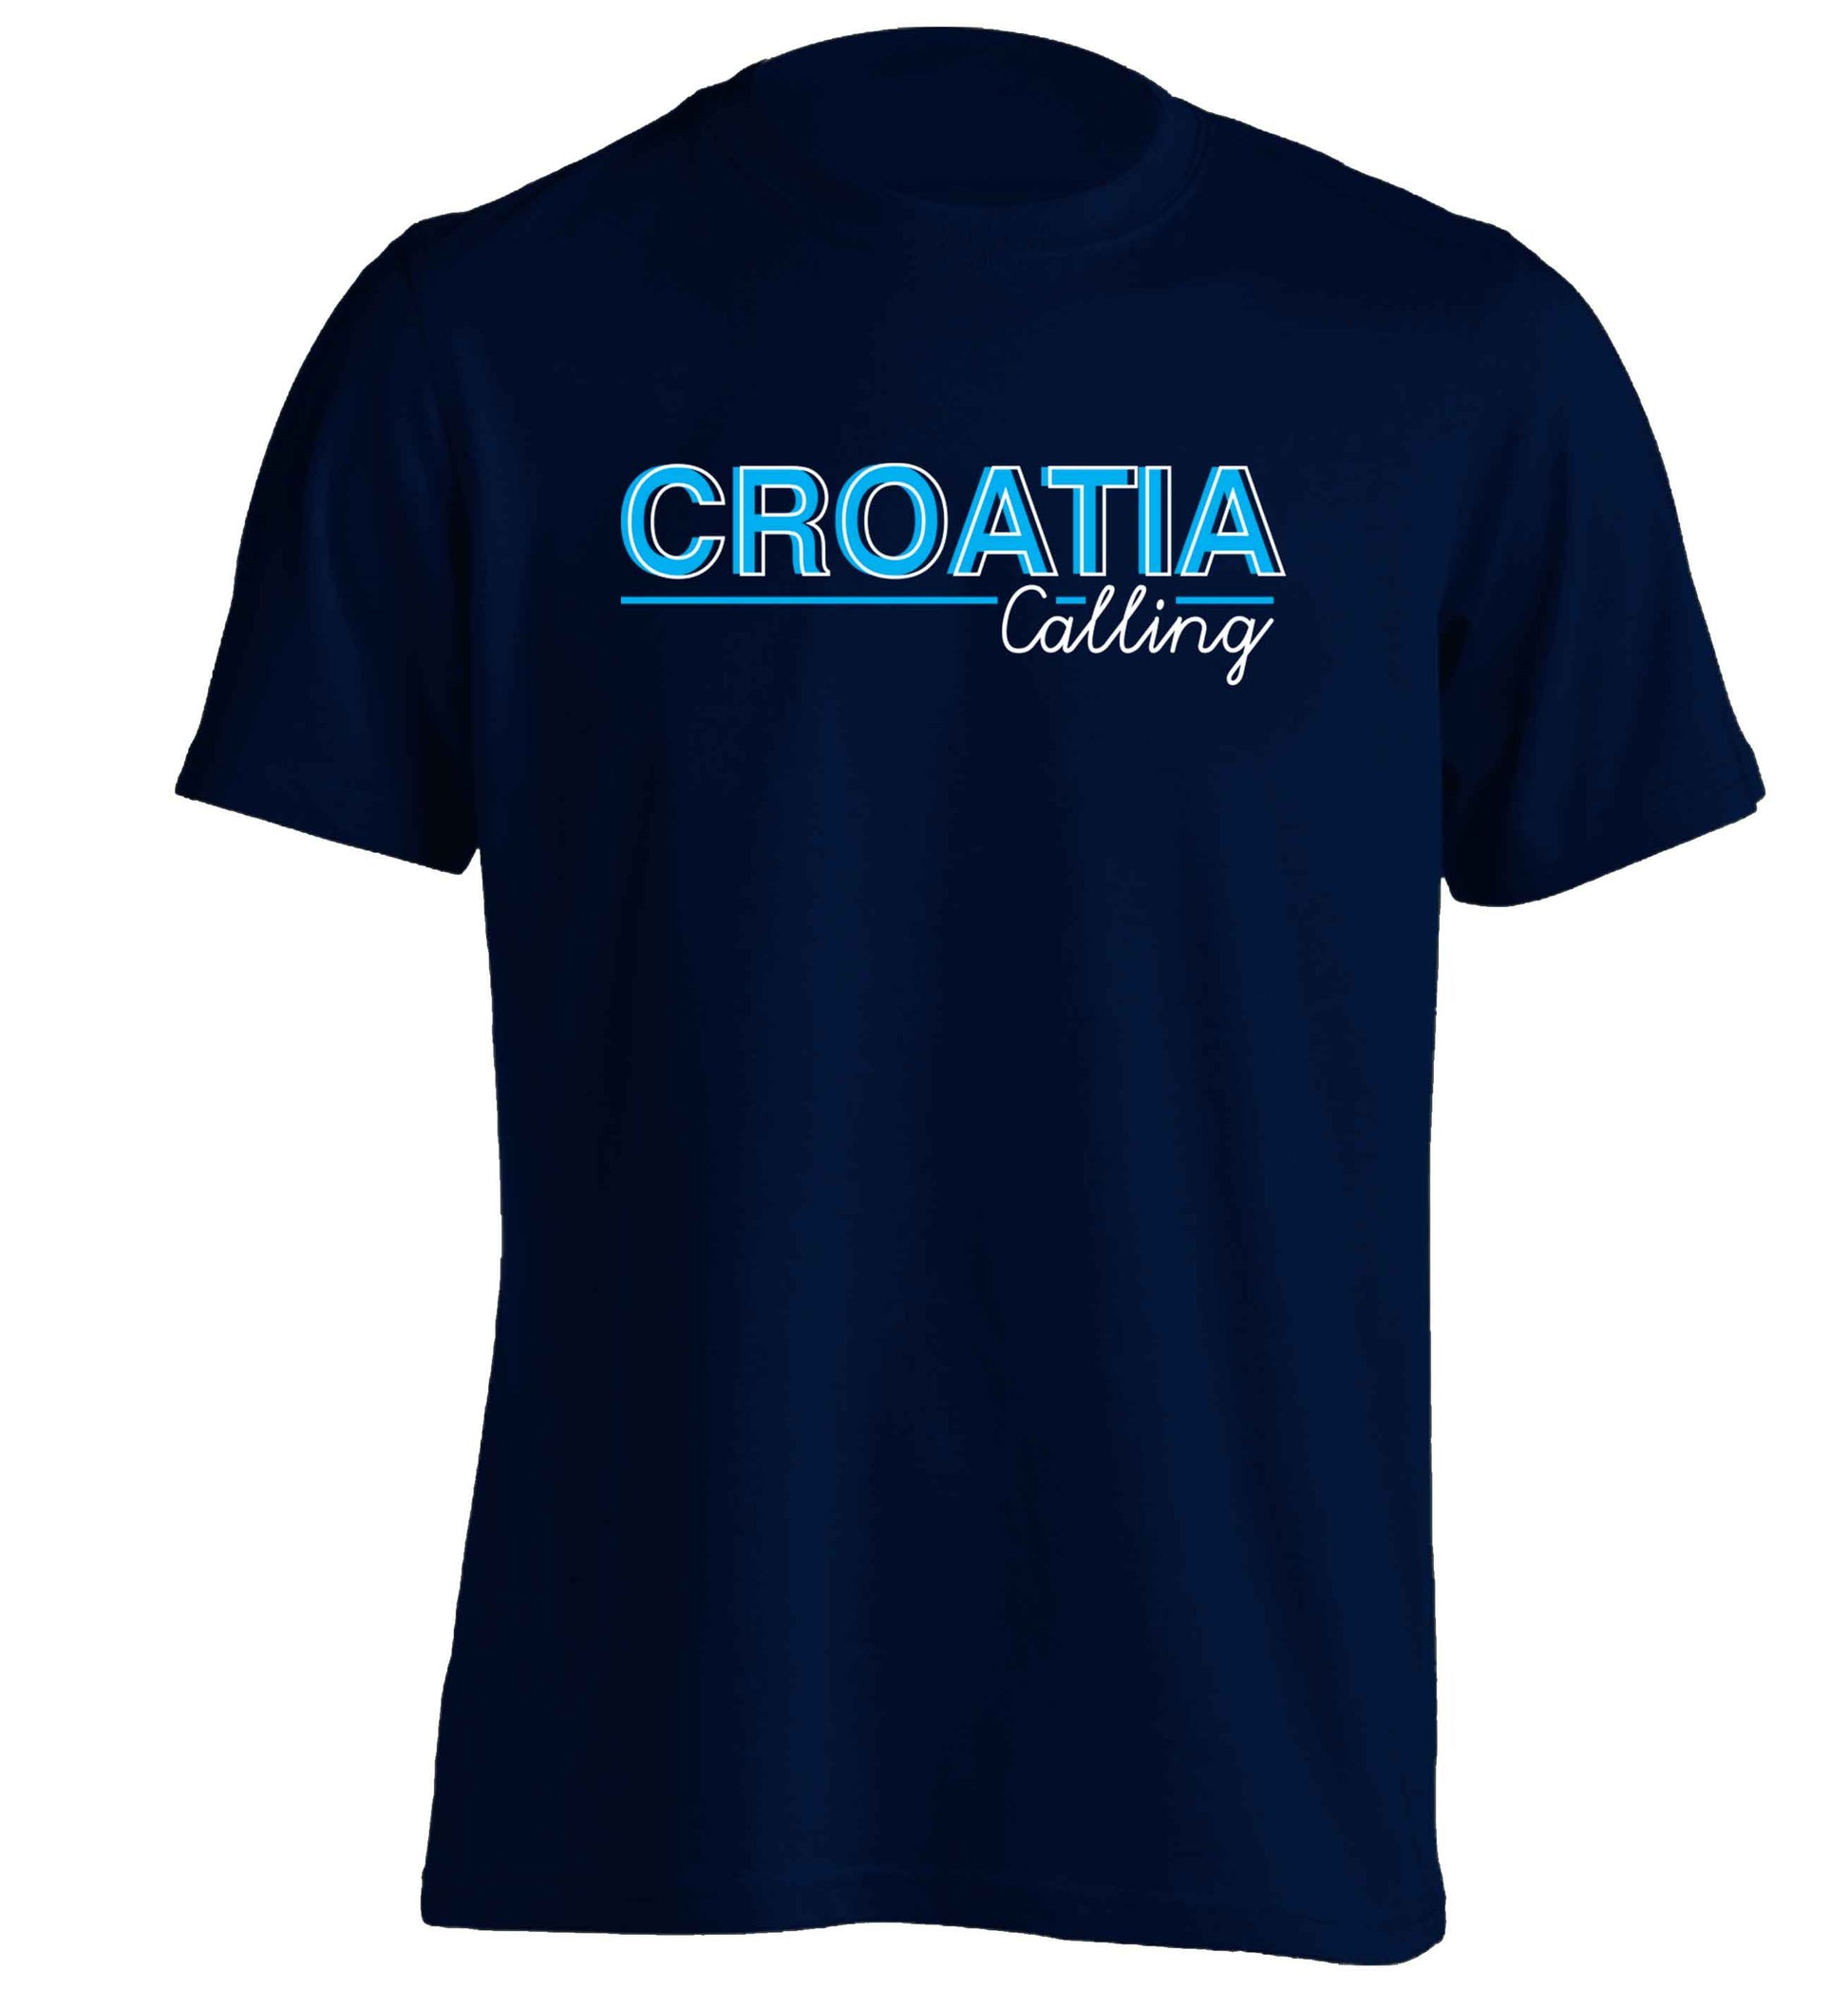 Croatia calling adults unisex navy Tshirt 2XL